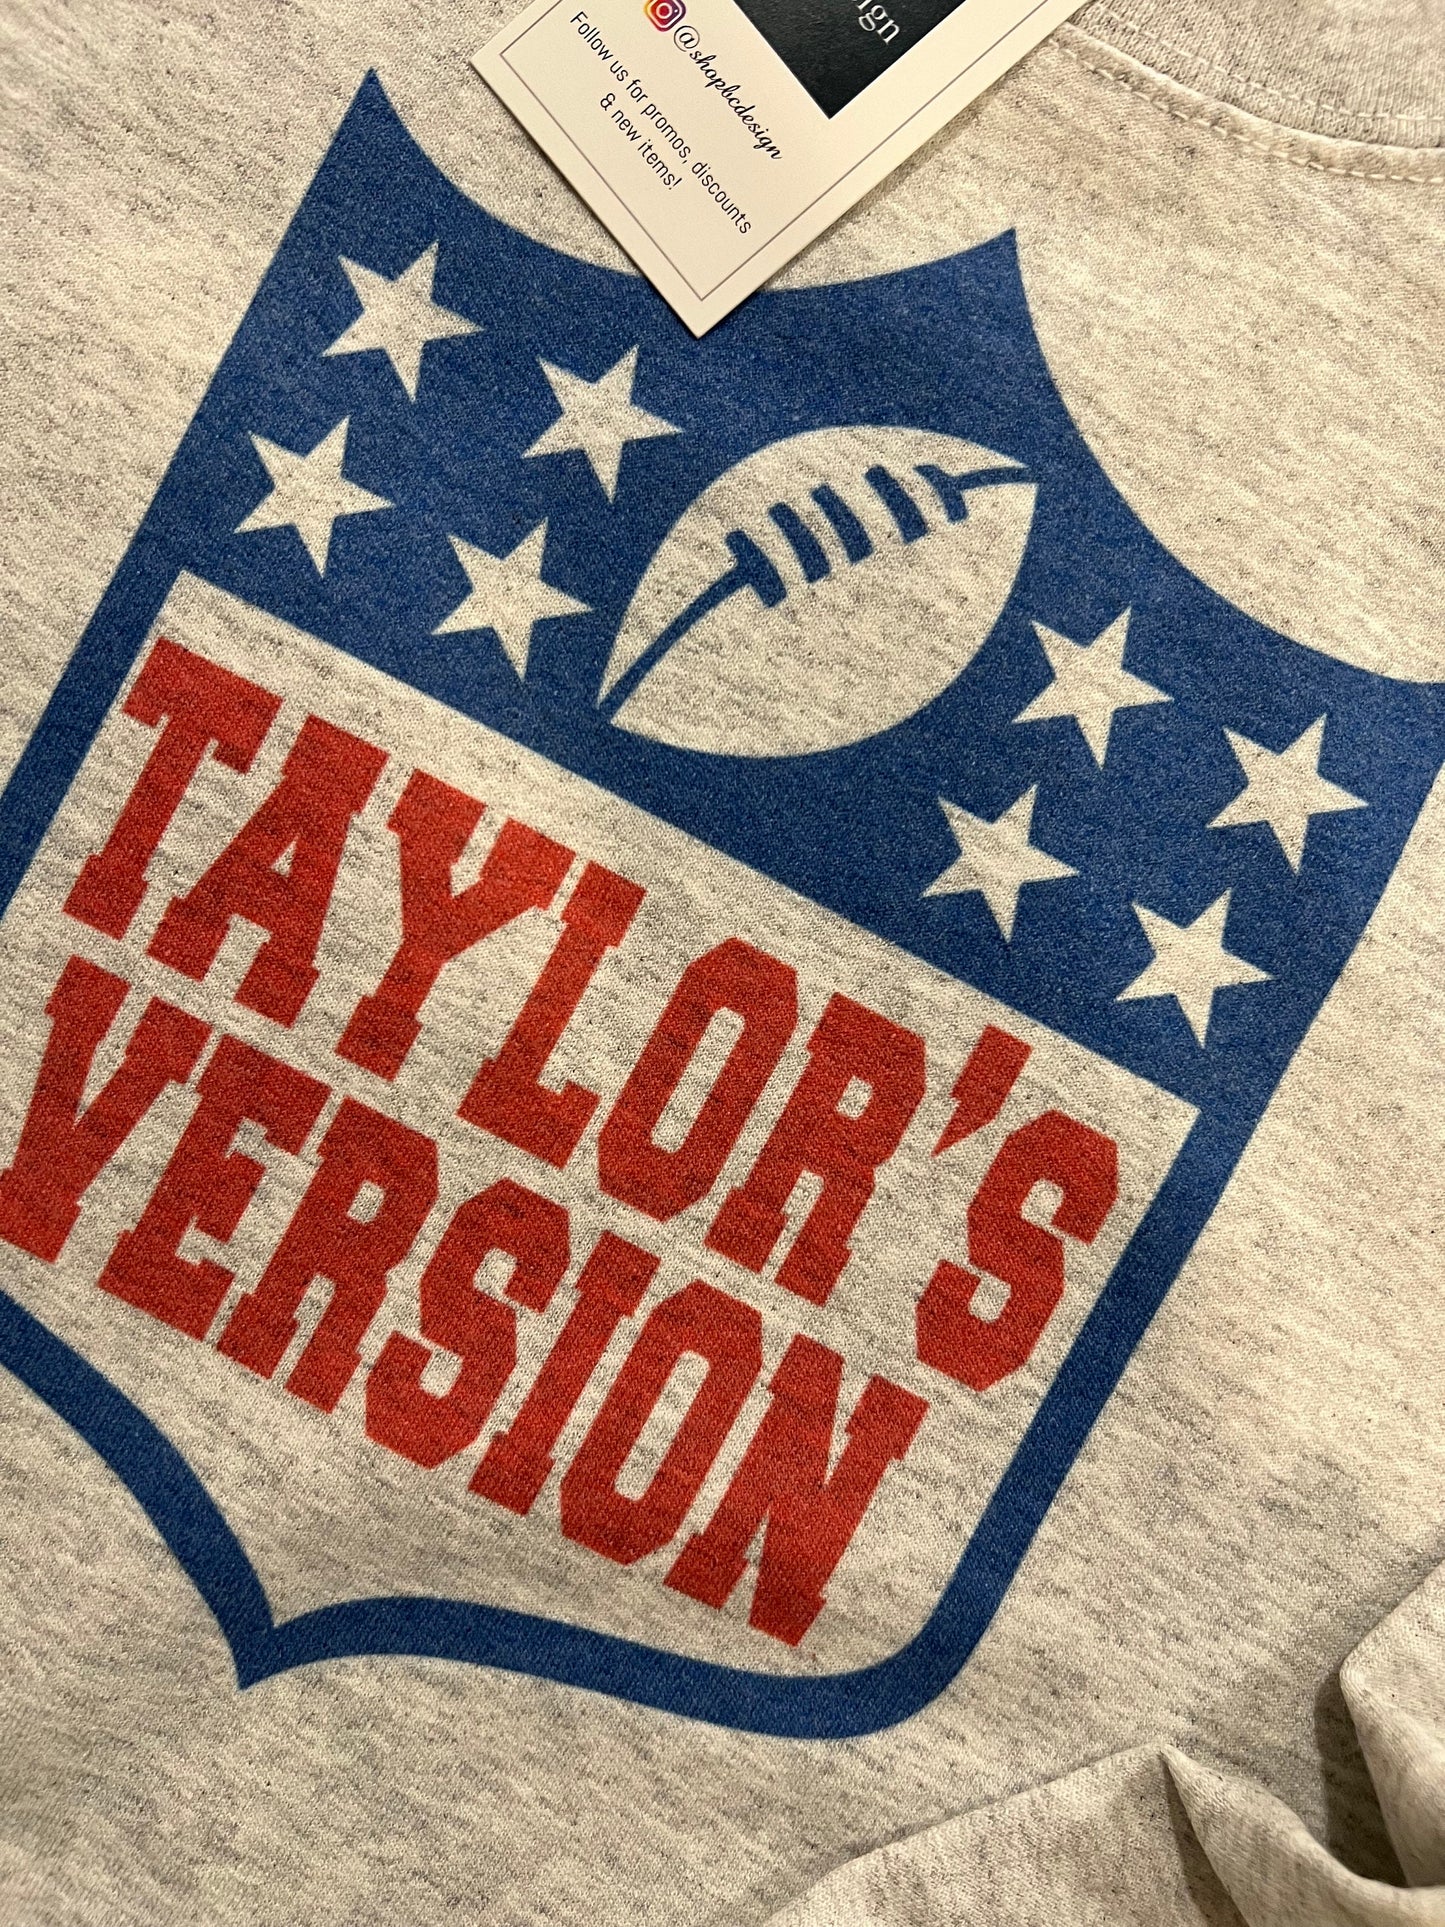 Taylor version Crewneck sweatshirt football sunday shirt for her